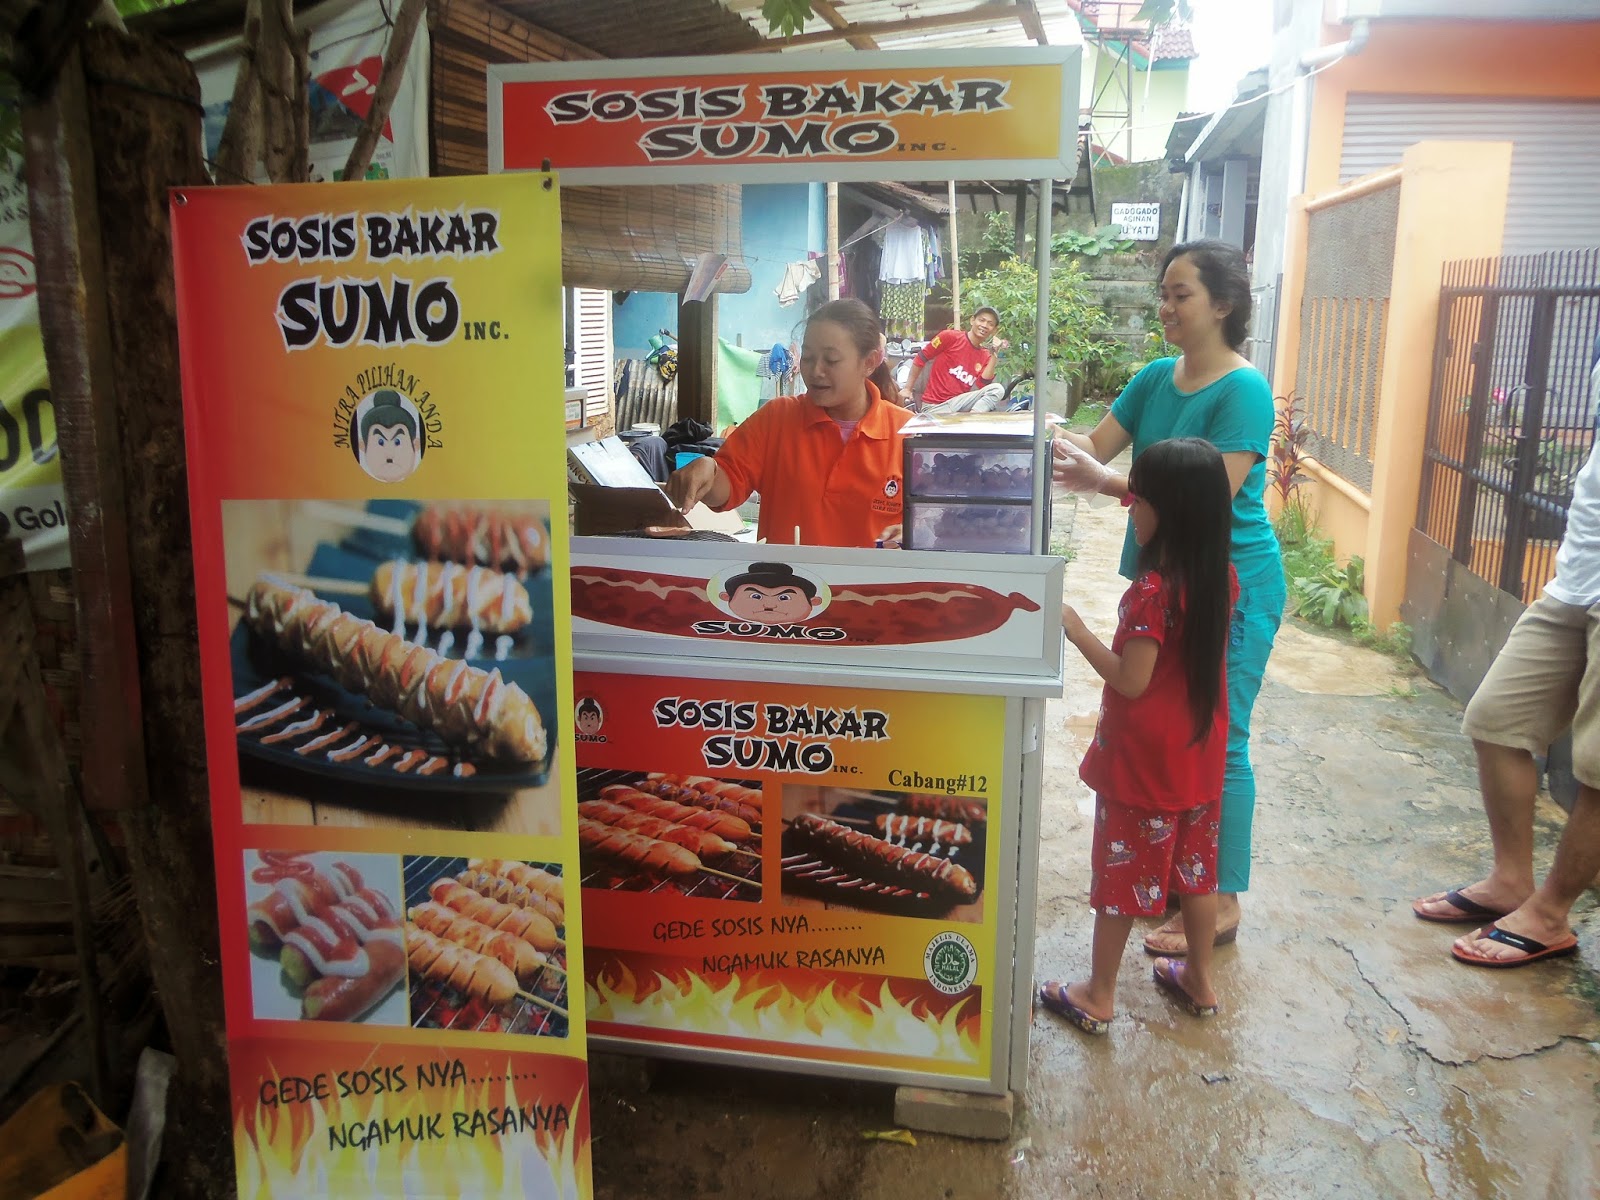  Sosis  Bakar  Sumo Inc HOT PRICE PAKET KEMITRAAN 